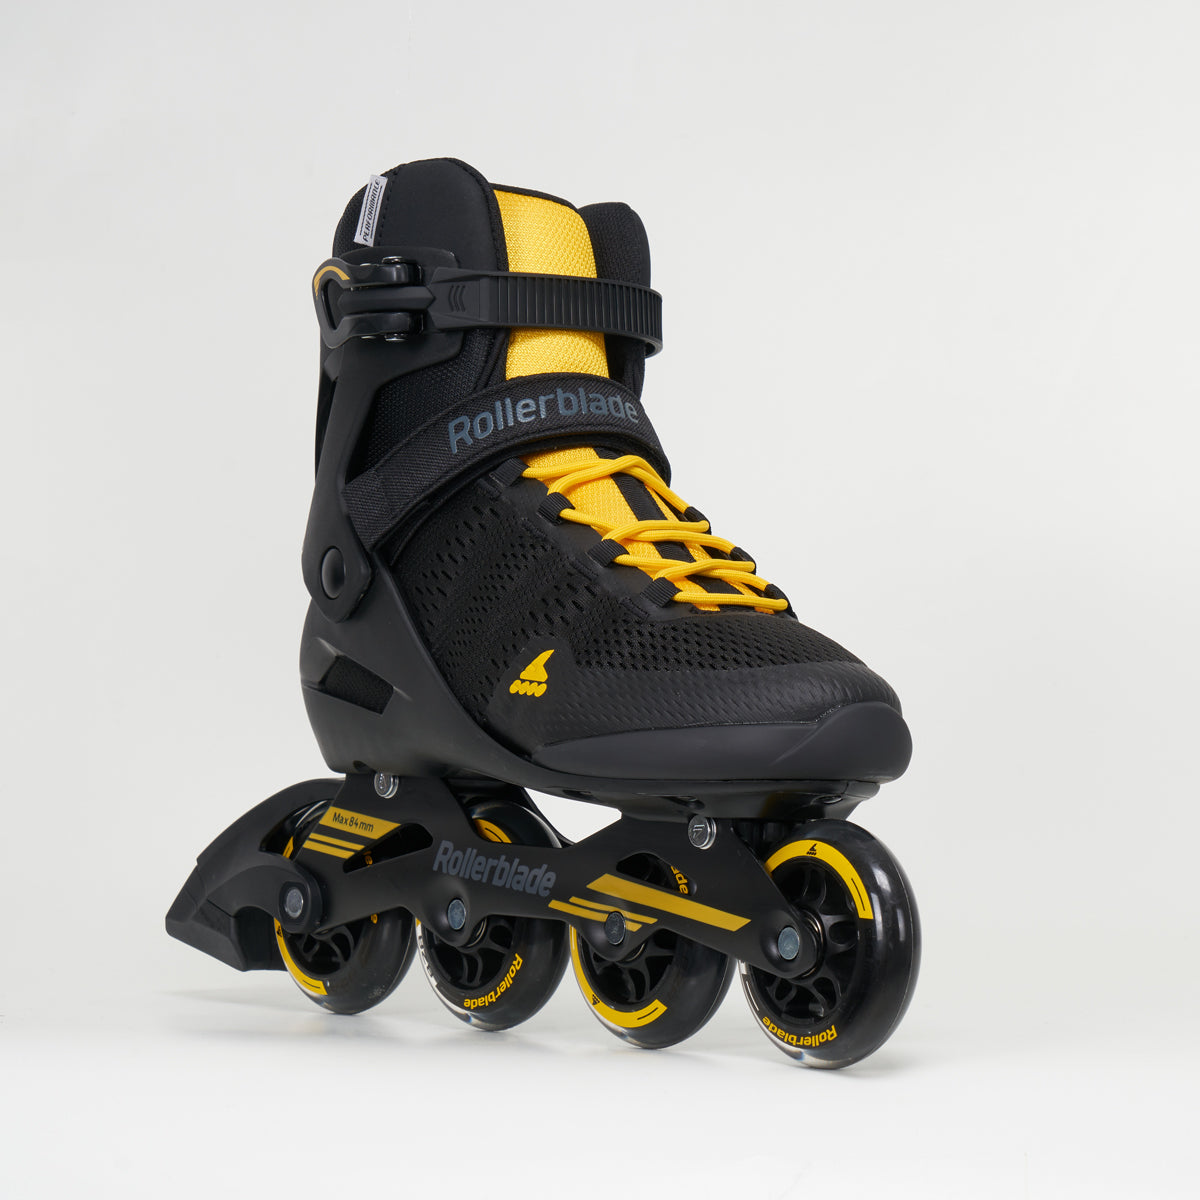 Rollerblade Spark 80 Skates - Black/Yellow